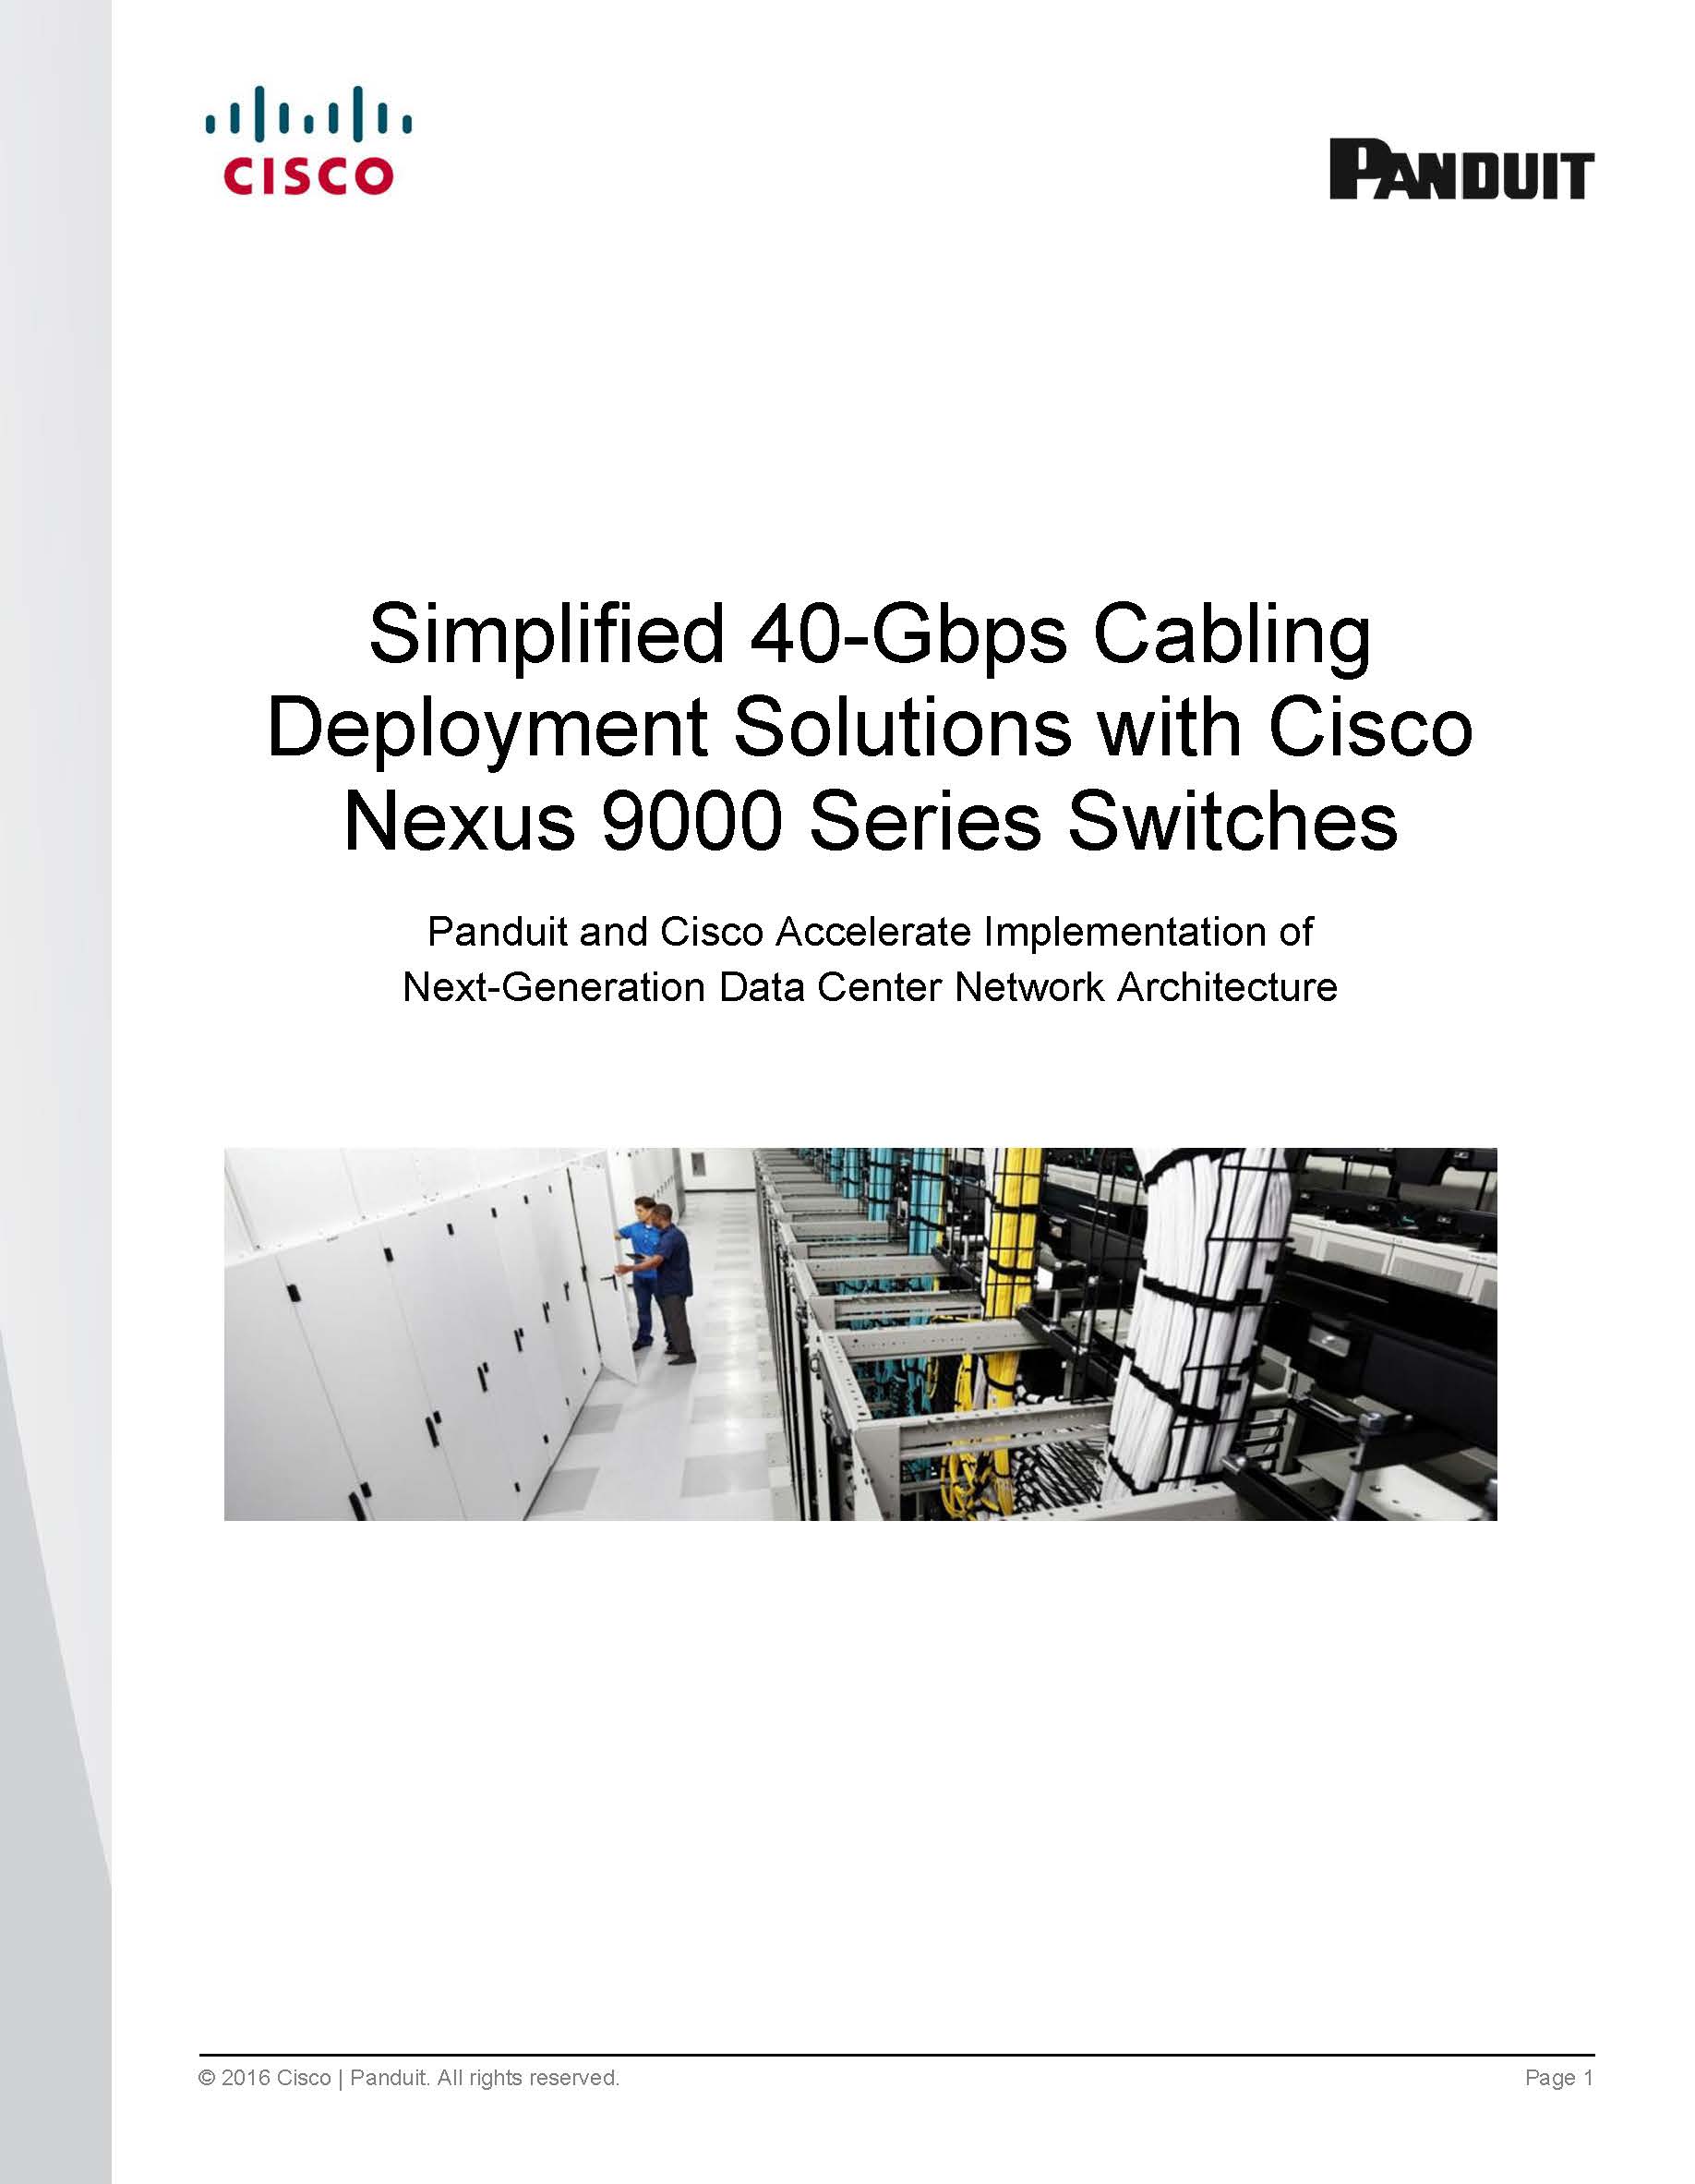 40 Gps Solutions with Nexus 9000